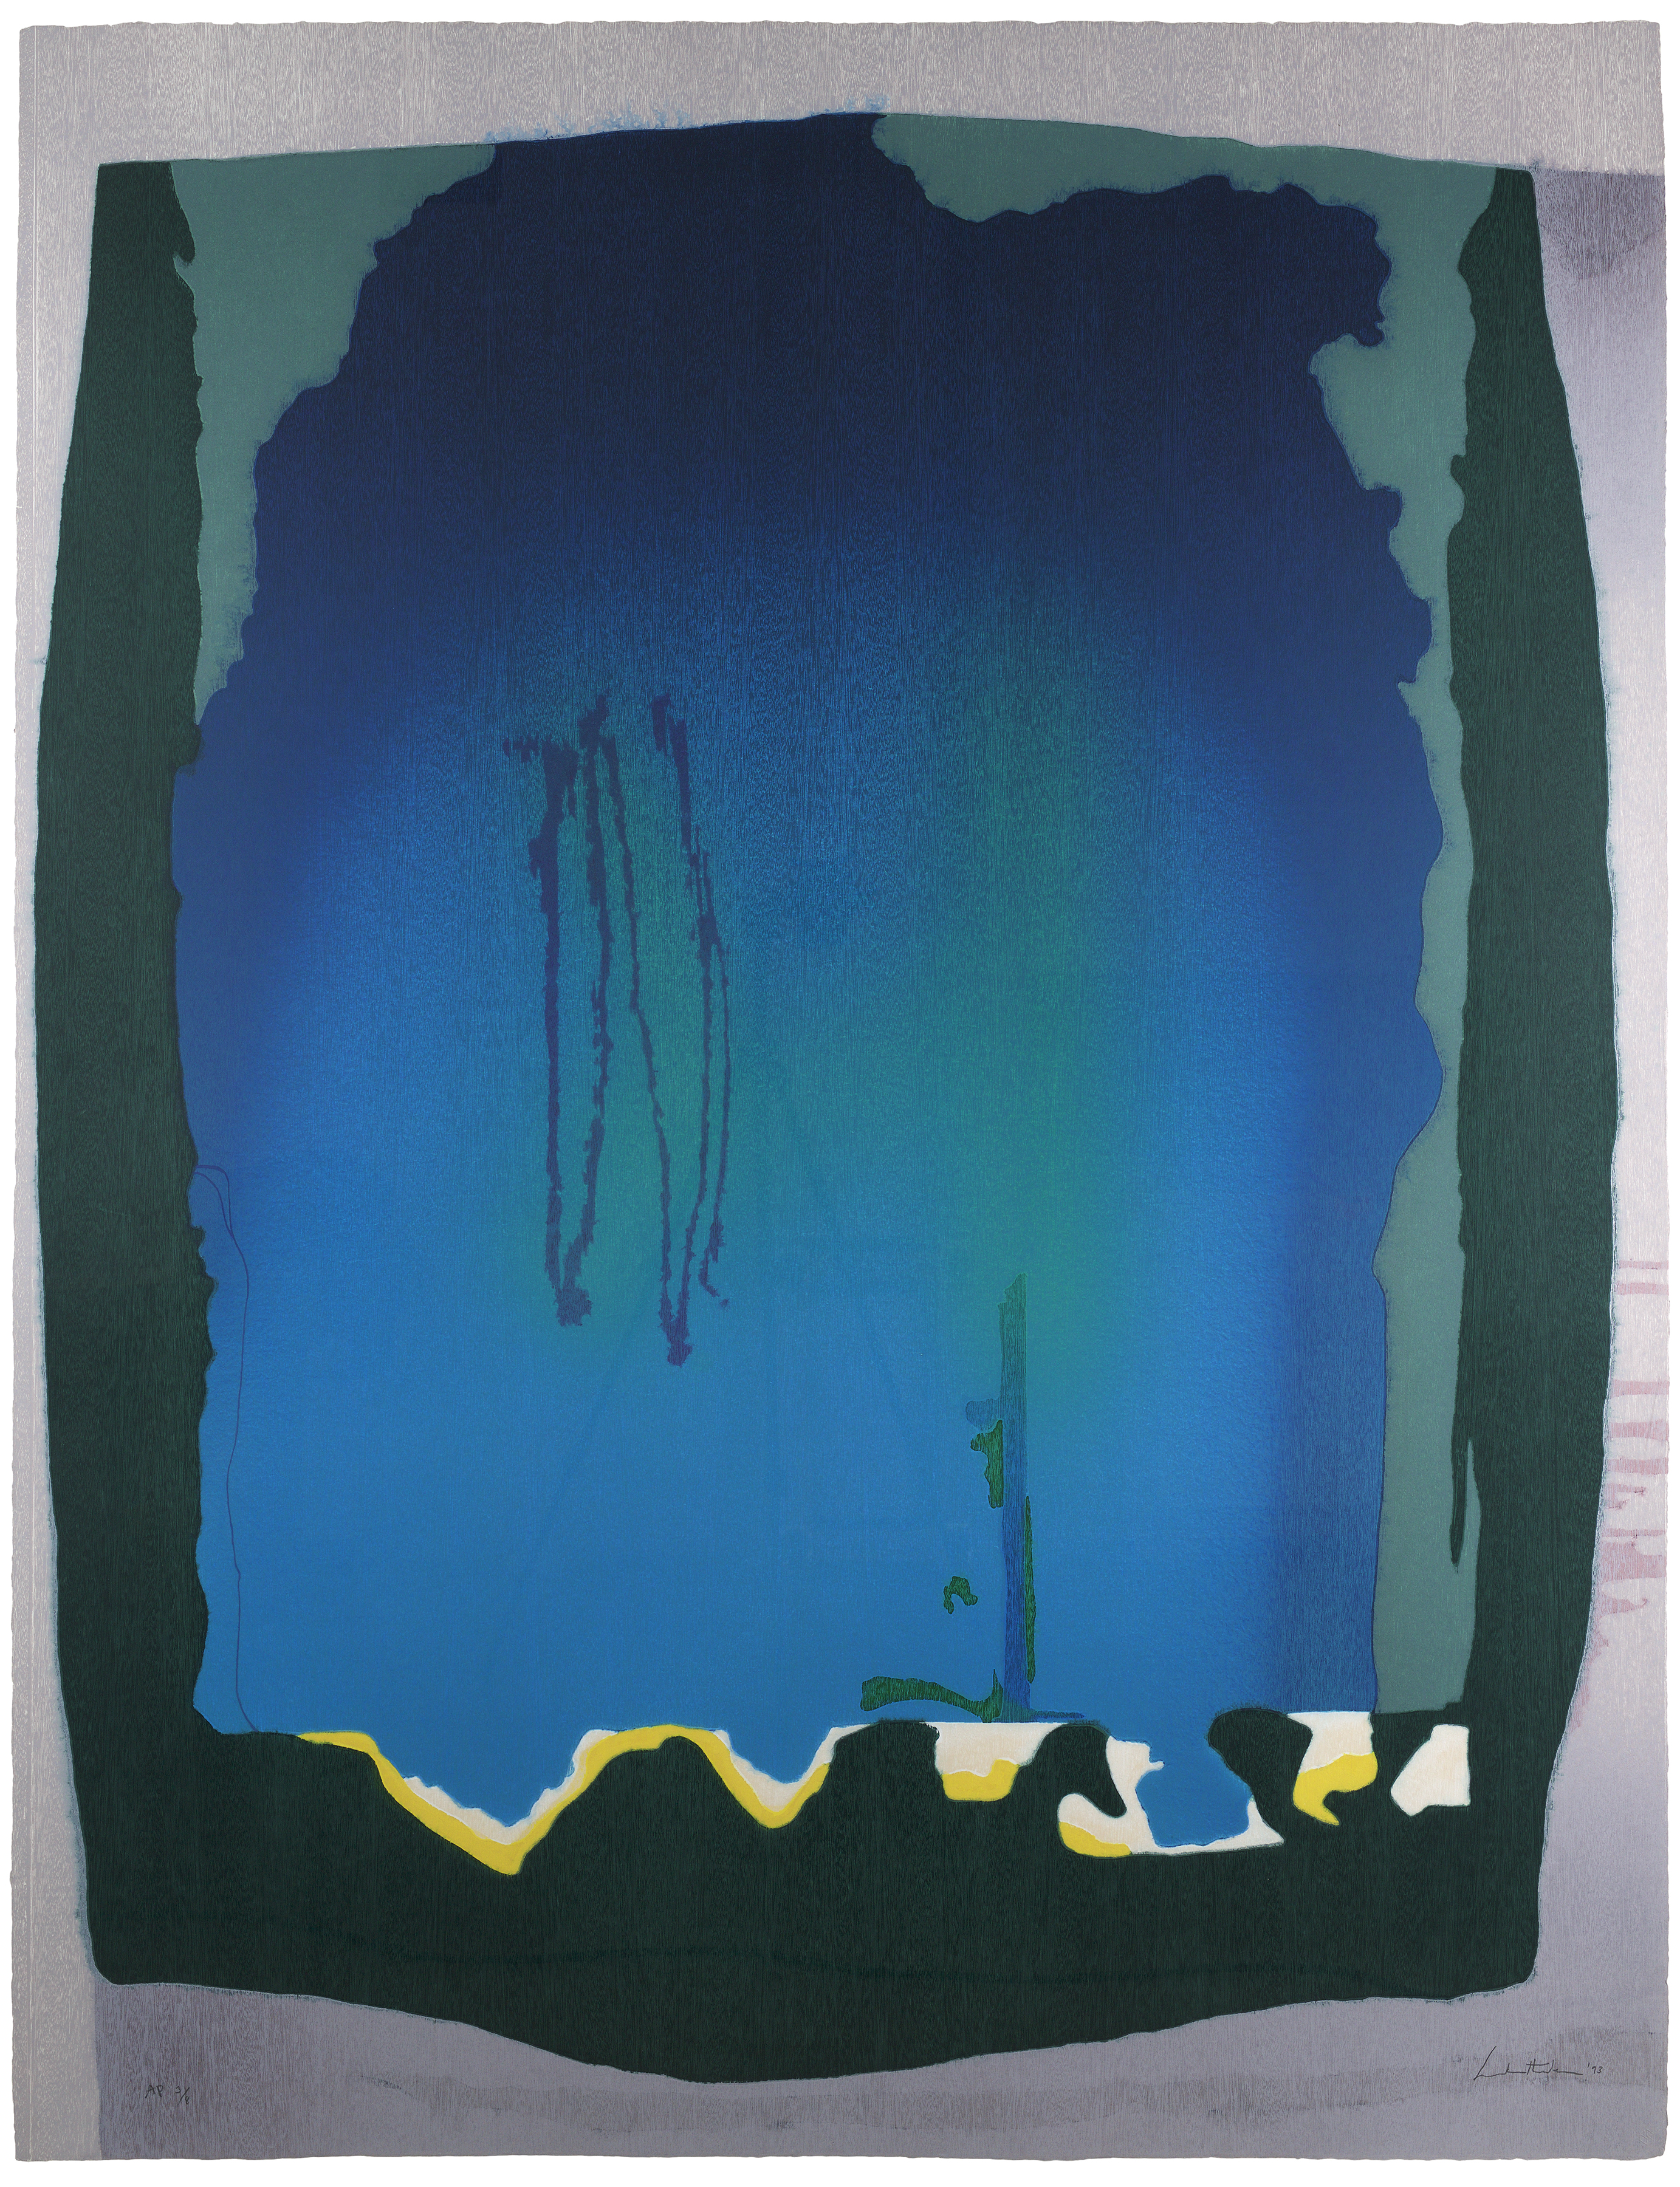 Volný pád by Helen Frankenthaler - 1993 - 199,4 x 153,7 cm 